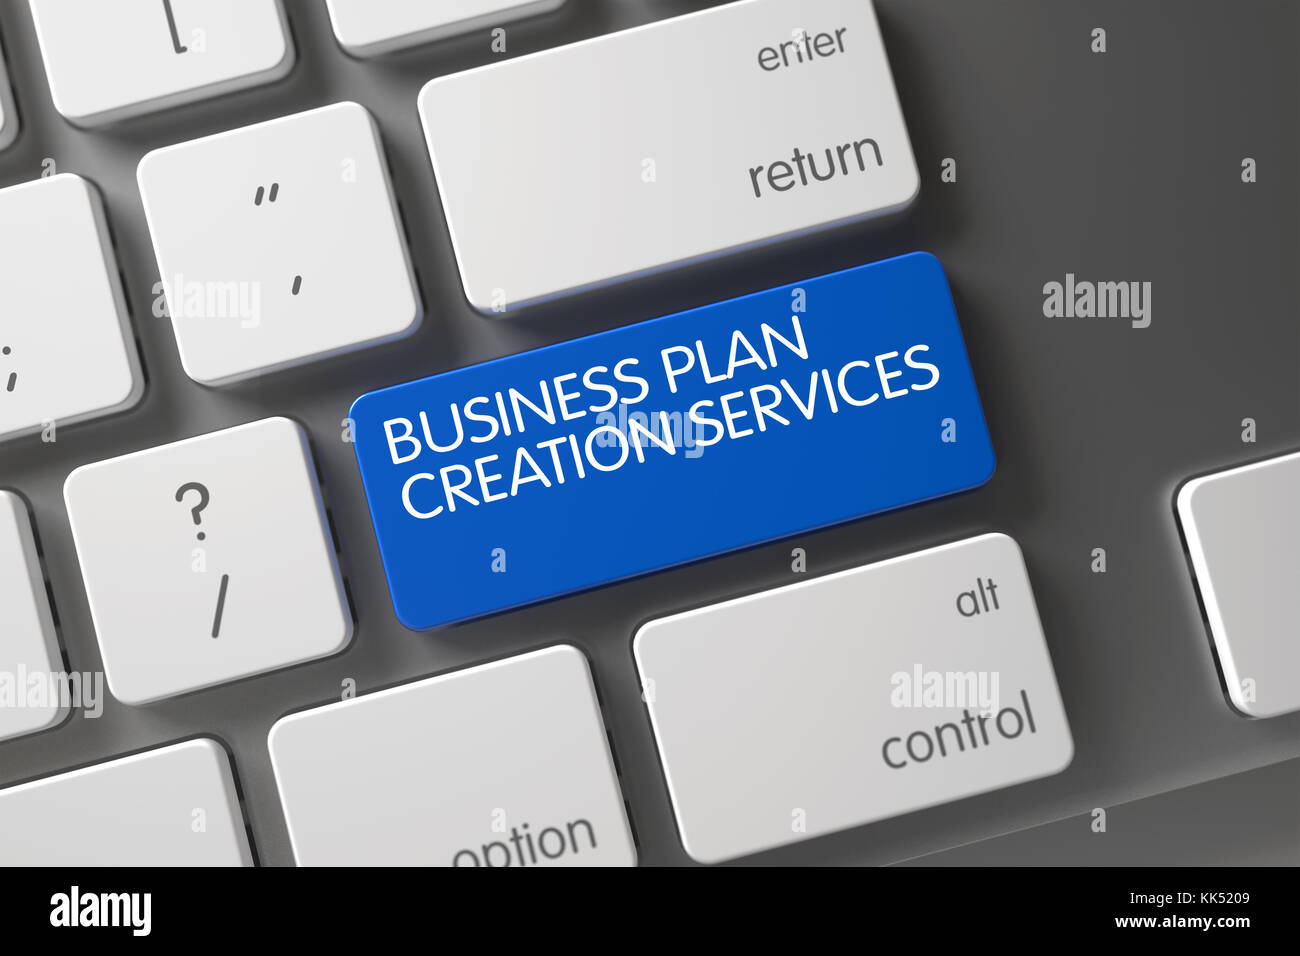 Business Plan Creation Services. 3D Concept. Stock Photo